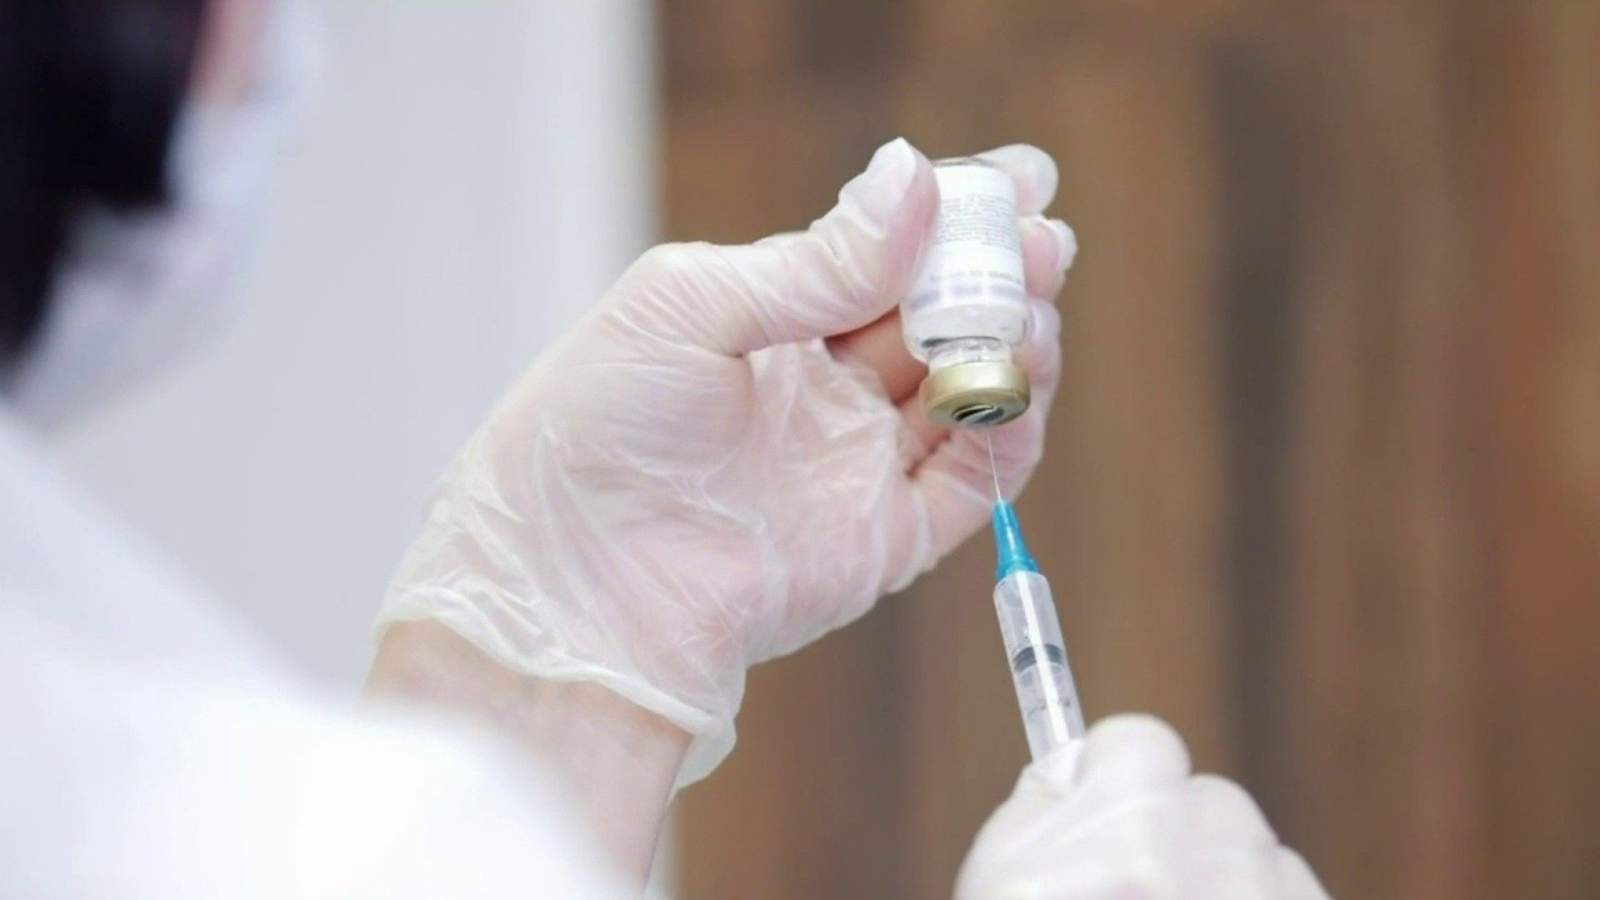 Oakland University COVID vaccine clinic still on, will administer Pfizer instead of J&J